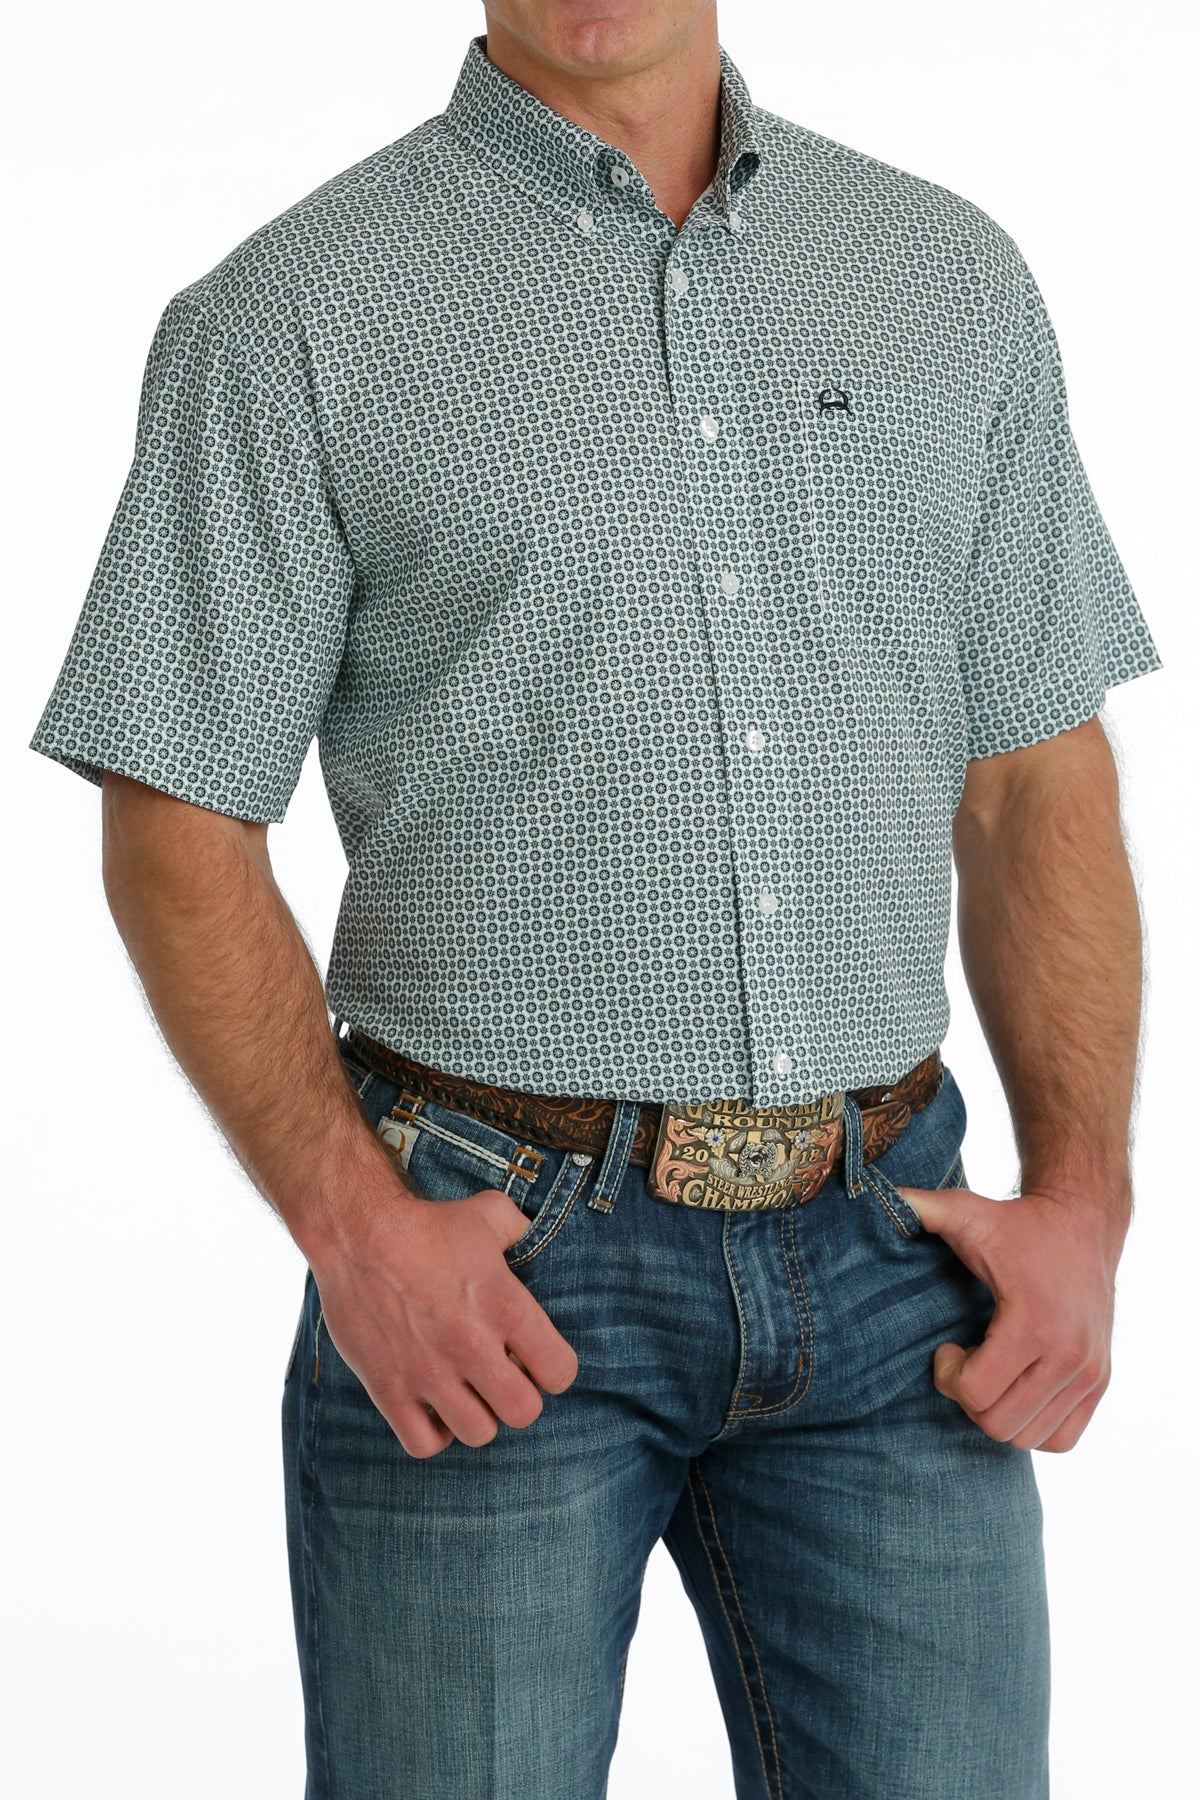 Cinch Men's Short Sleeve Shirt STYLE MTW1704130